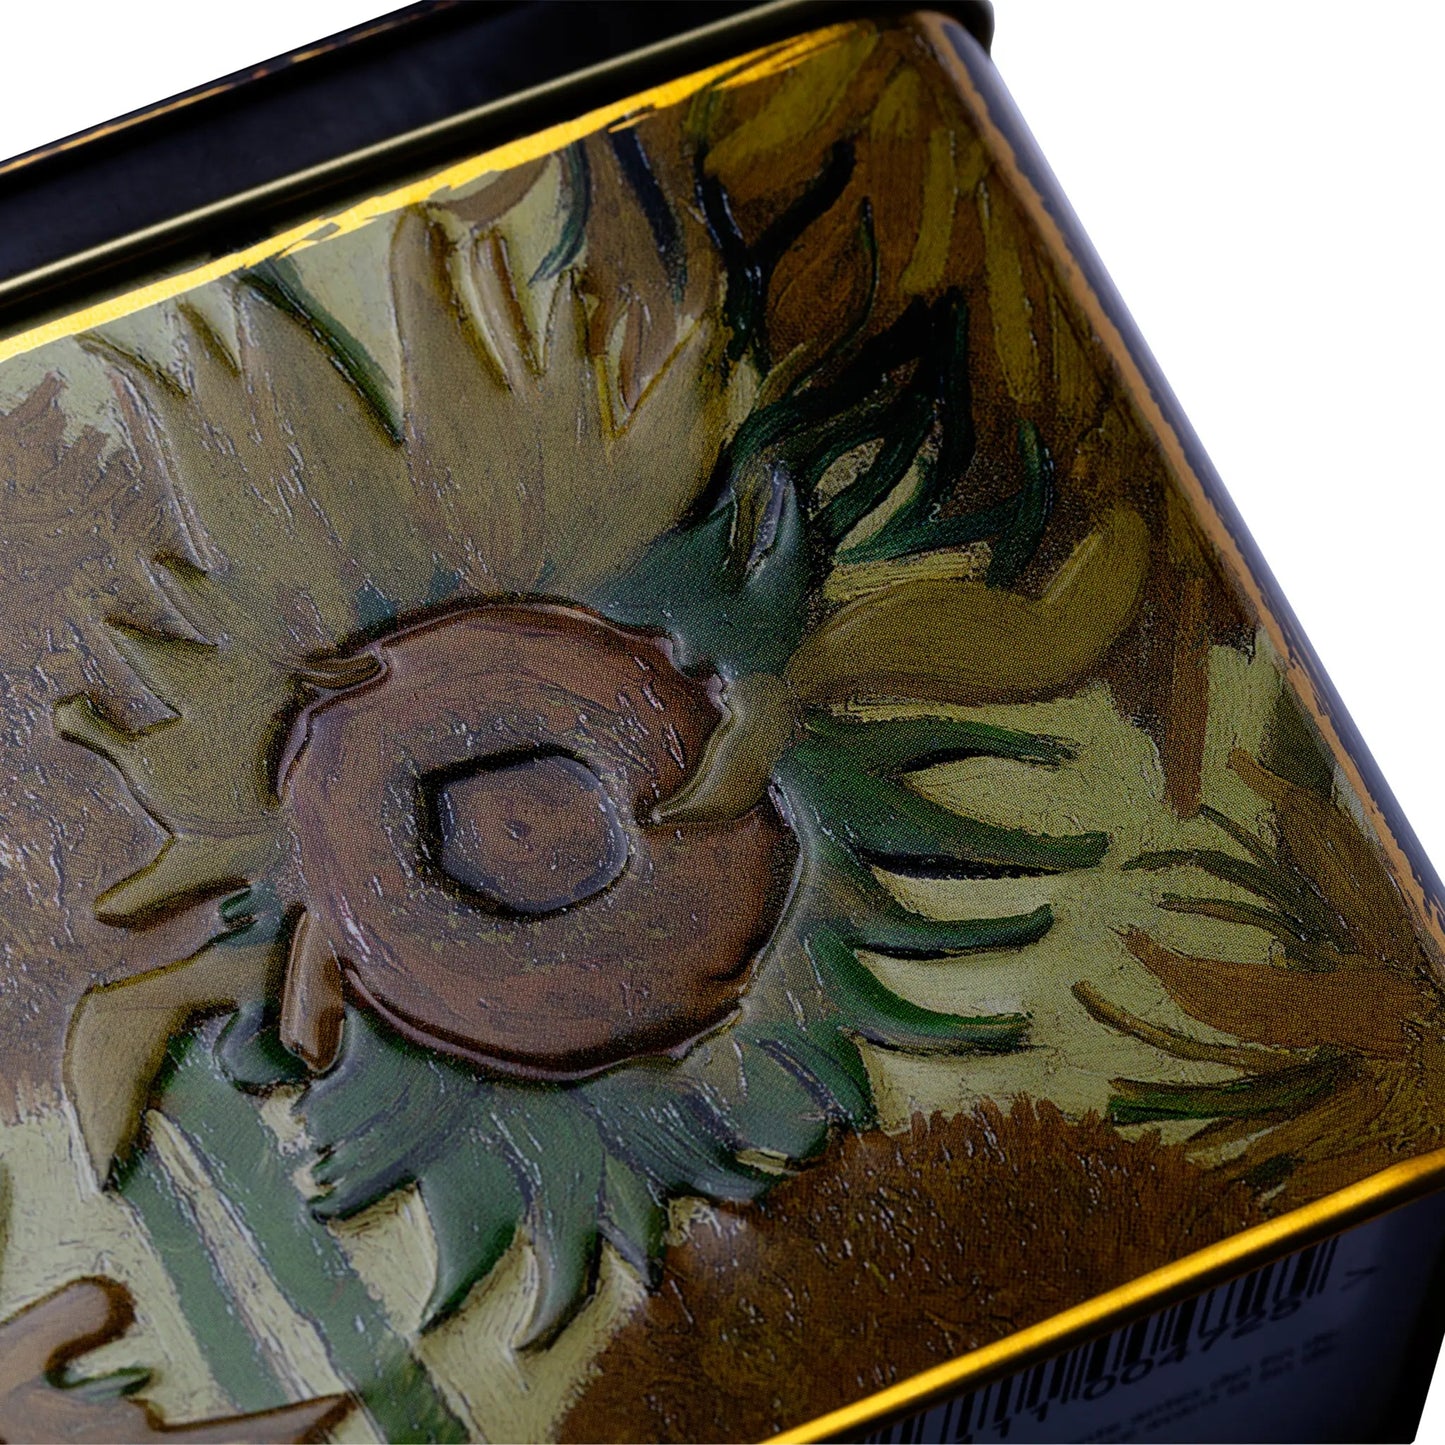 Sunflowers by Vincent Van Gogh - Classic Tea Tin - 40 English Breakfast Teabags Tea Tins New English Teas 